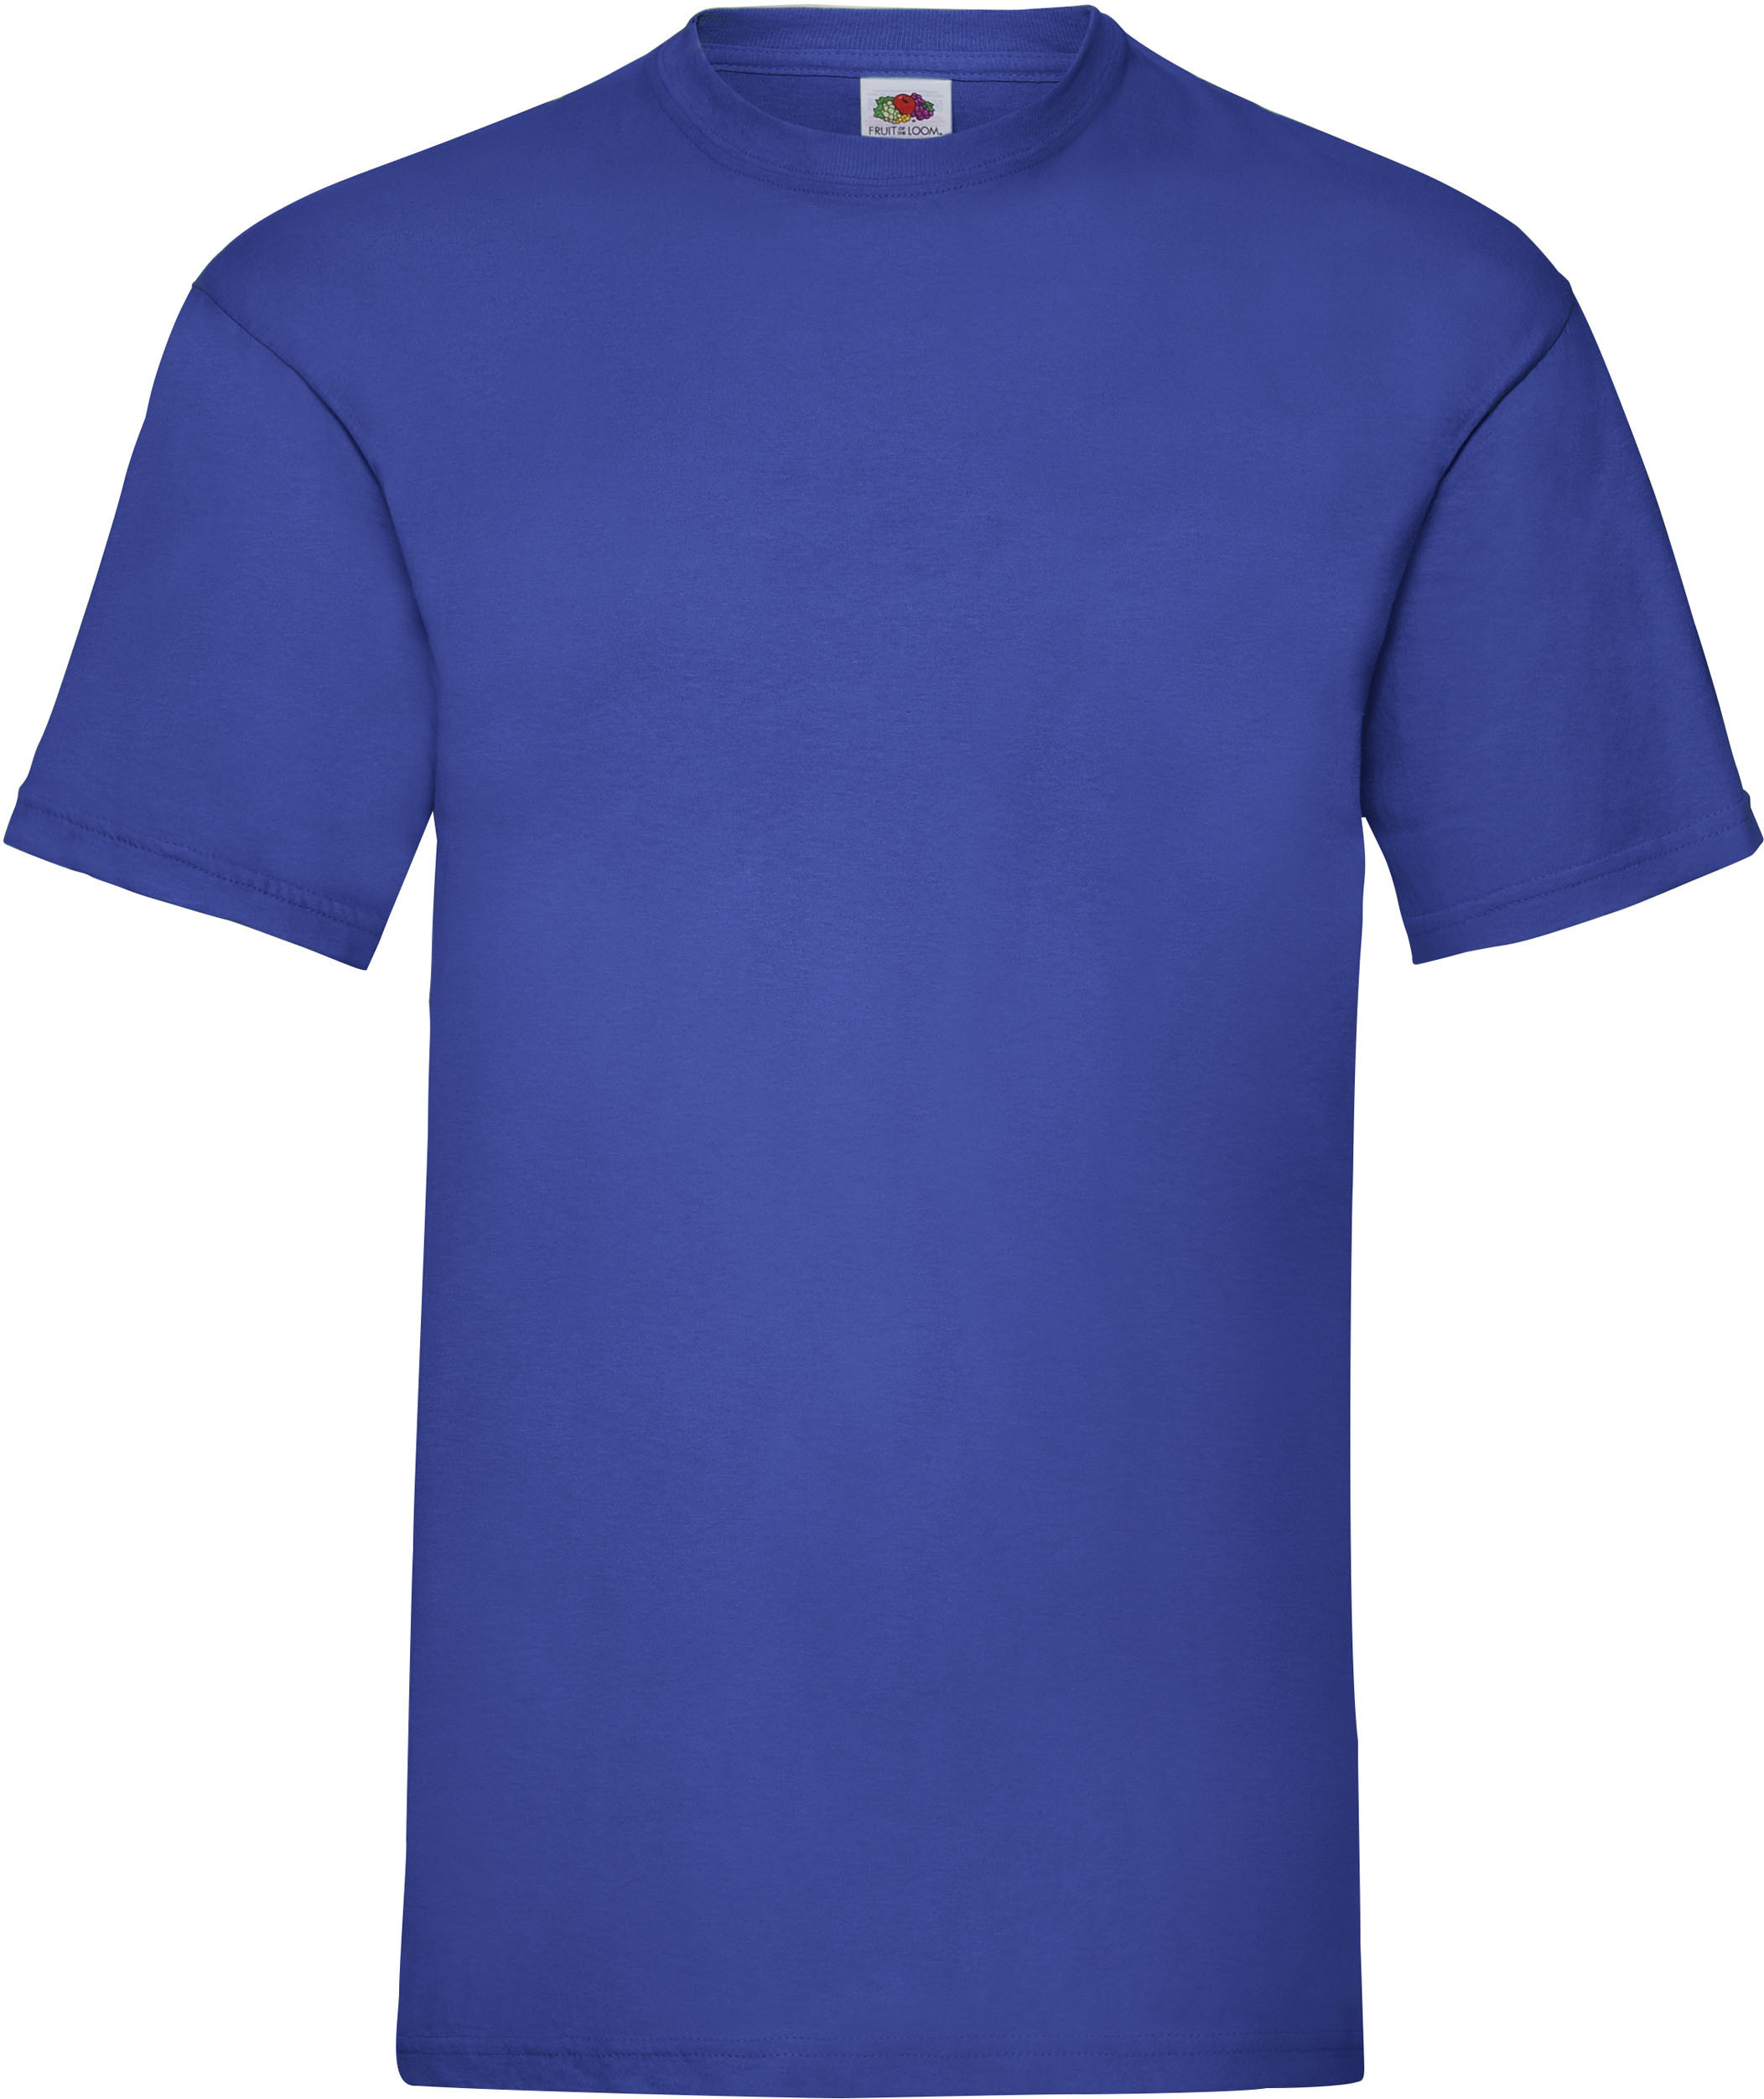 camiseta_personalizada_sc221_azul_royal